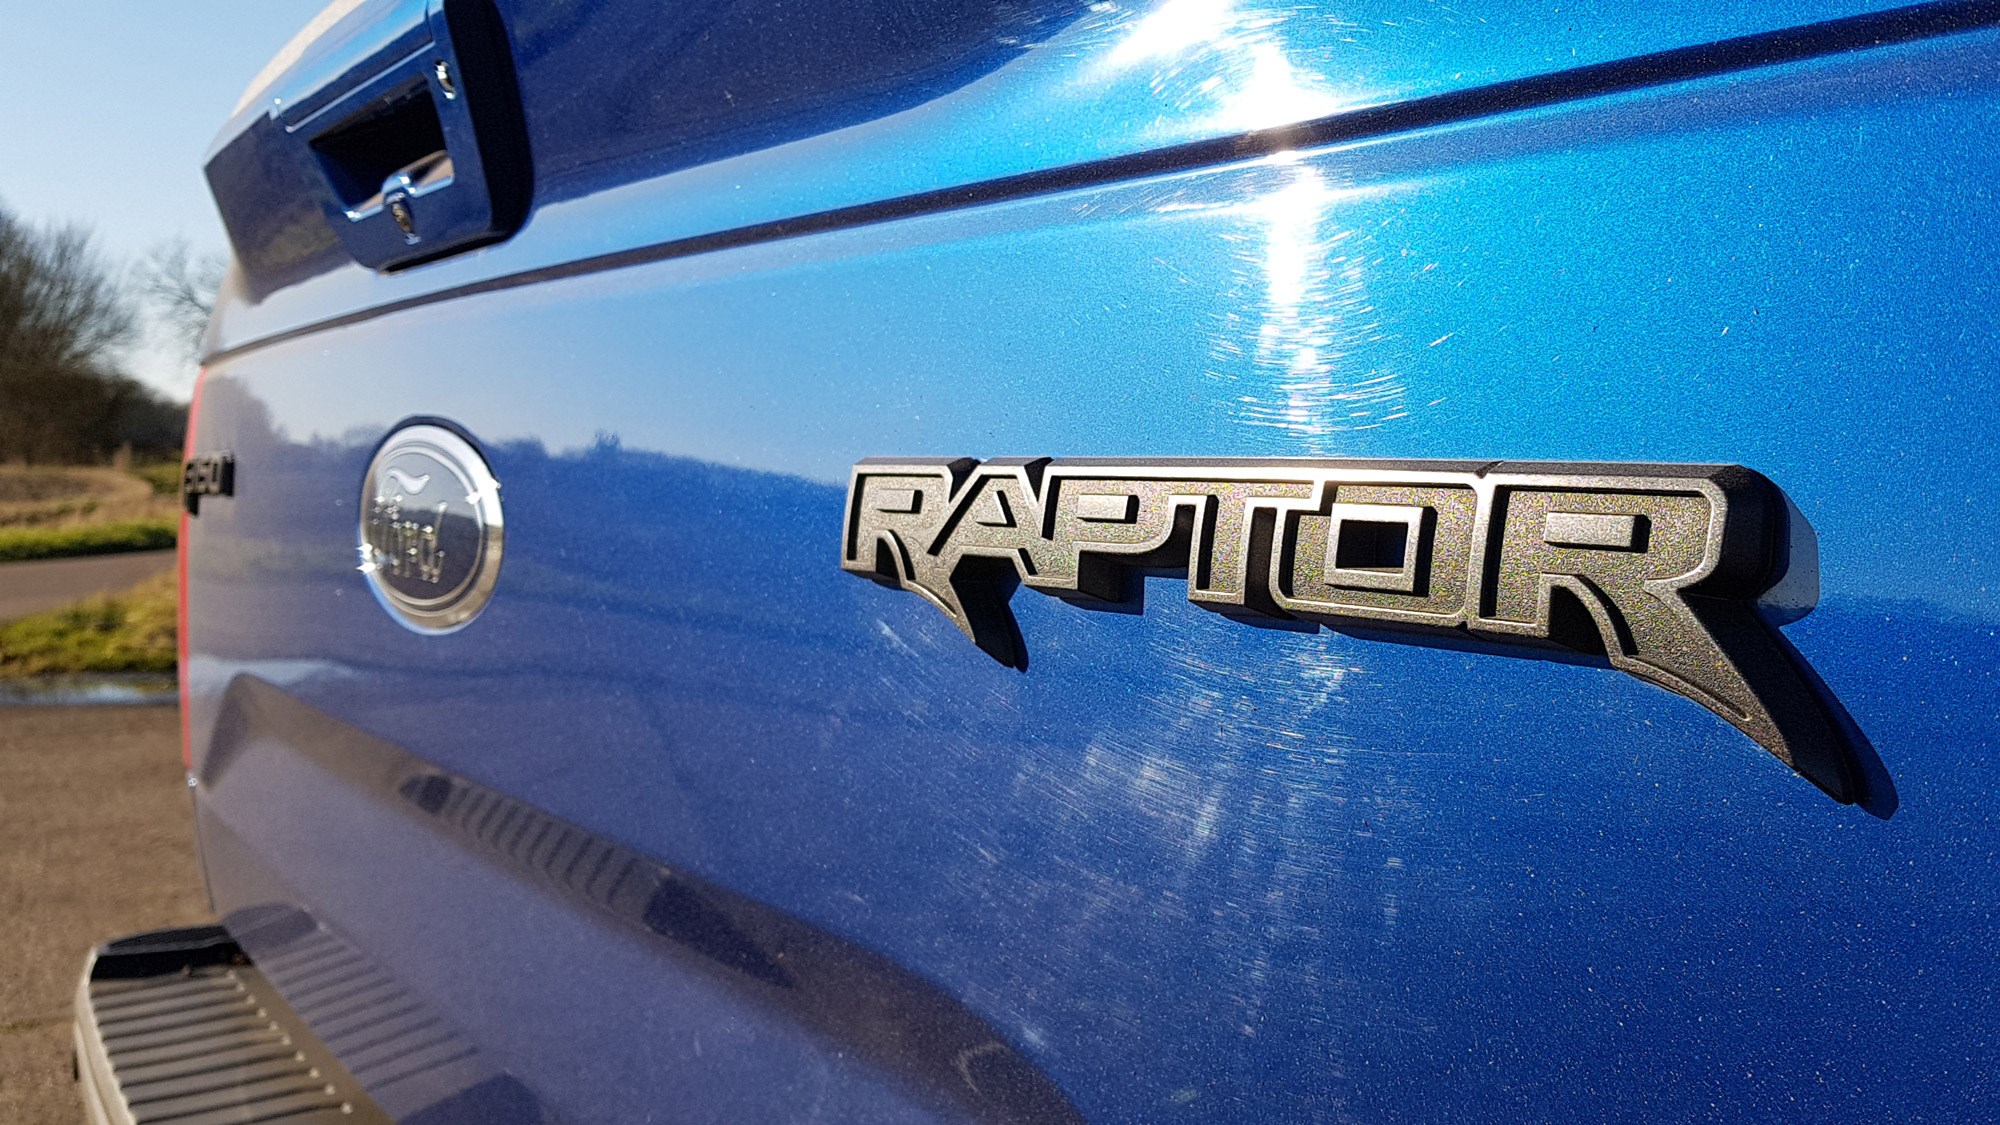 Ford Raptor rear badge